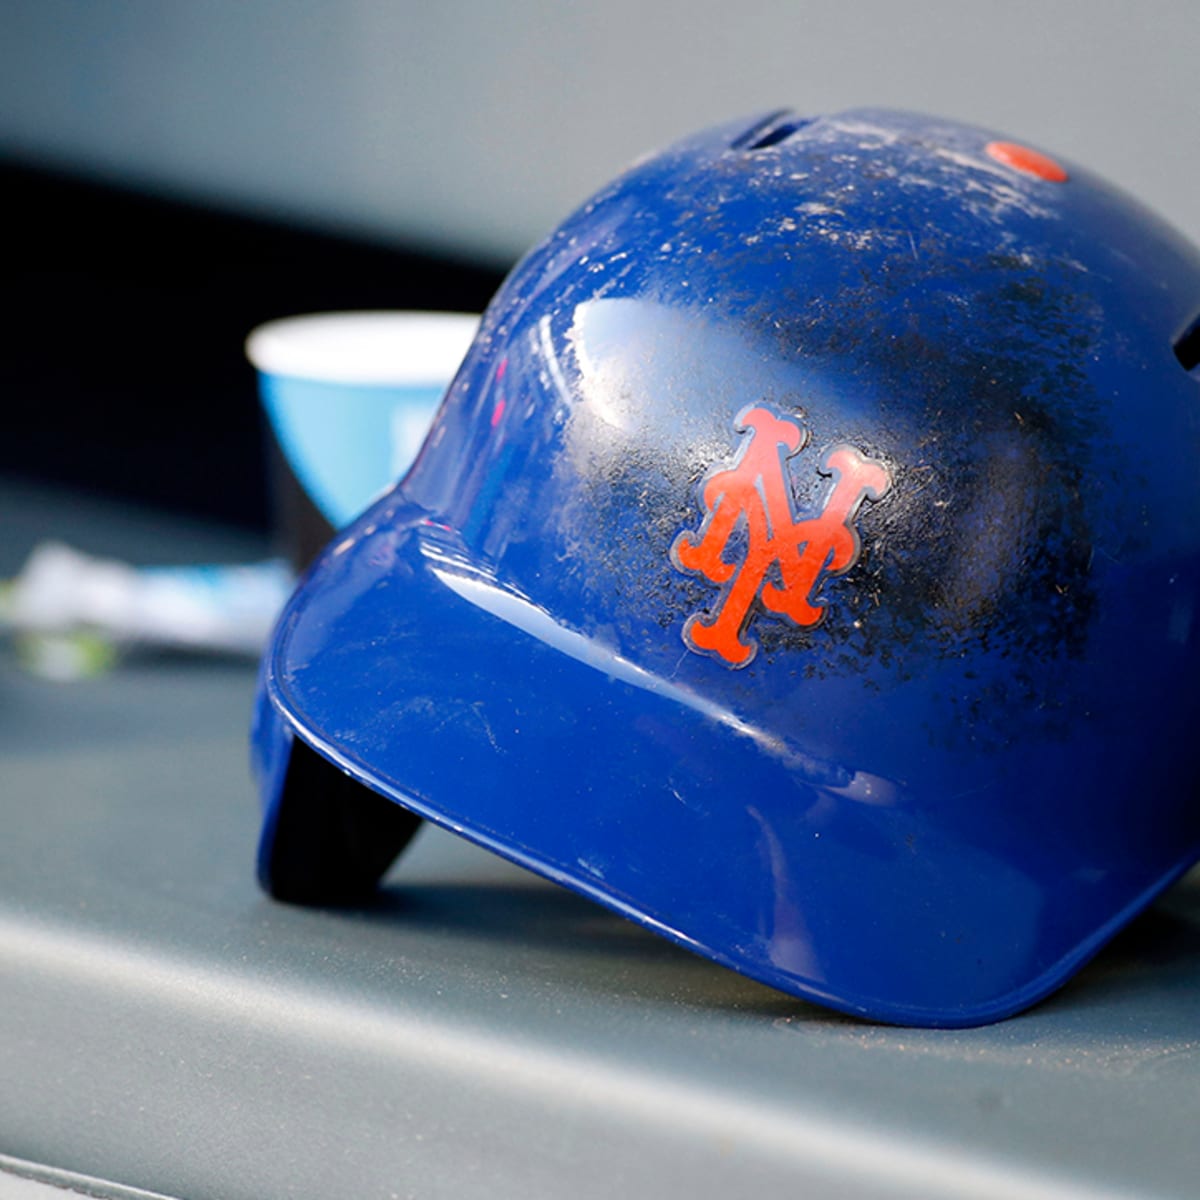 Mets embarking on aggressive rebrand (Report)